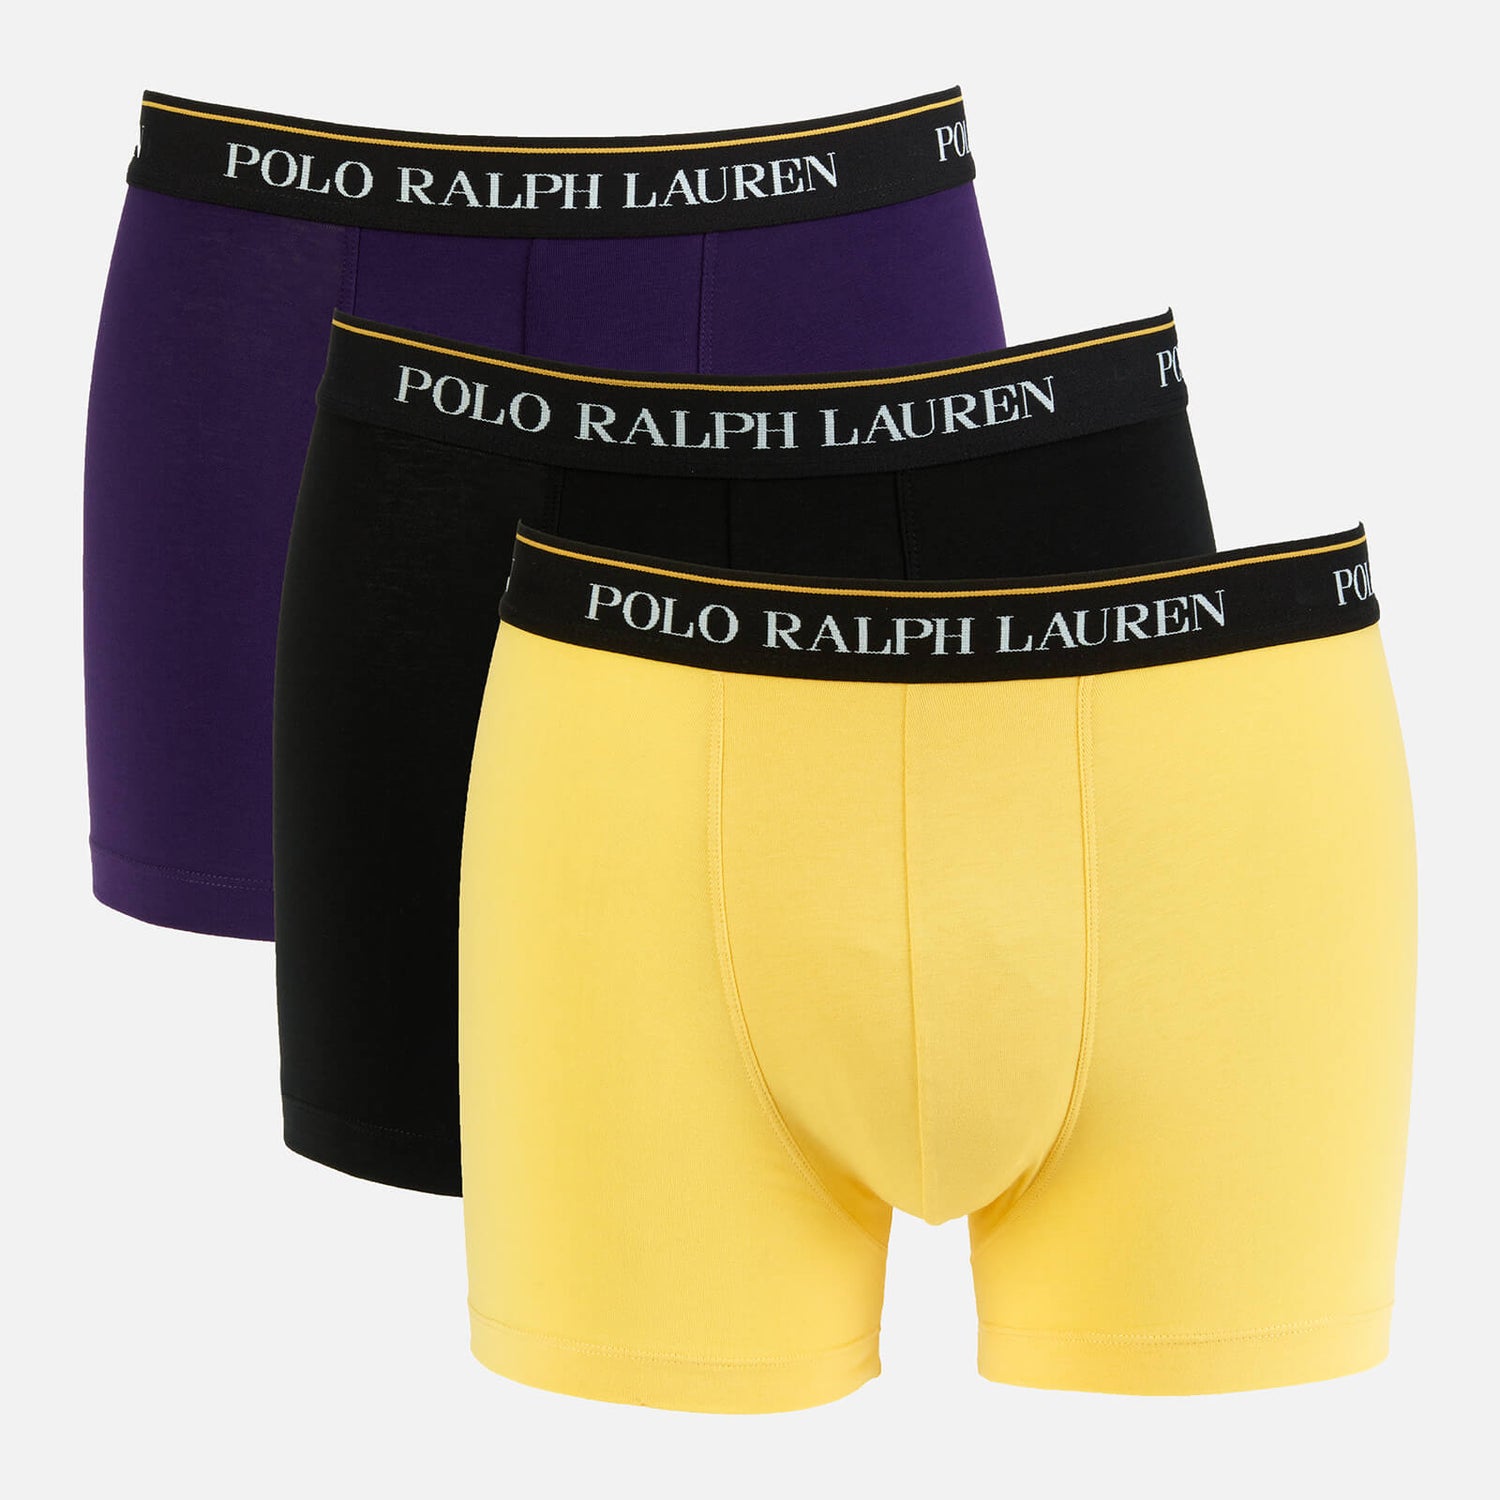 Polo Ralph Lauren Men's 3-Pack Classic Trunk Boxer Shorts - Black/Purple/Yellow